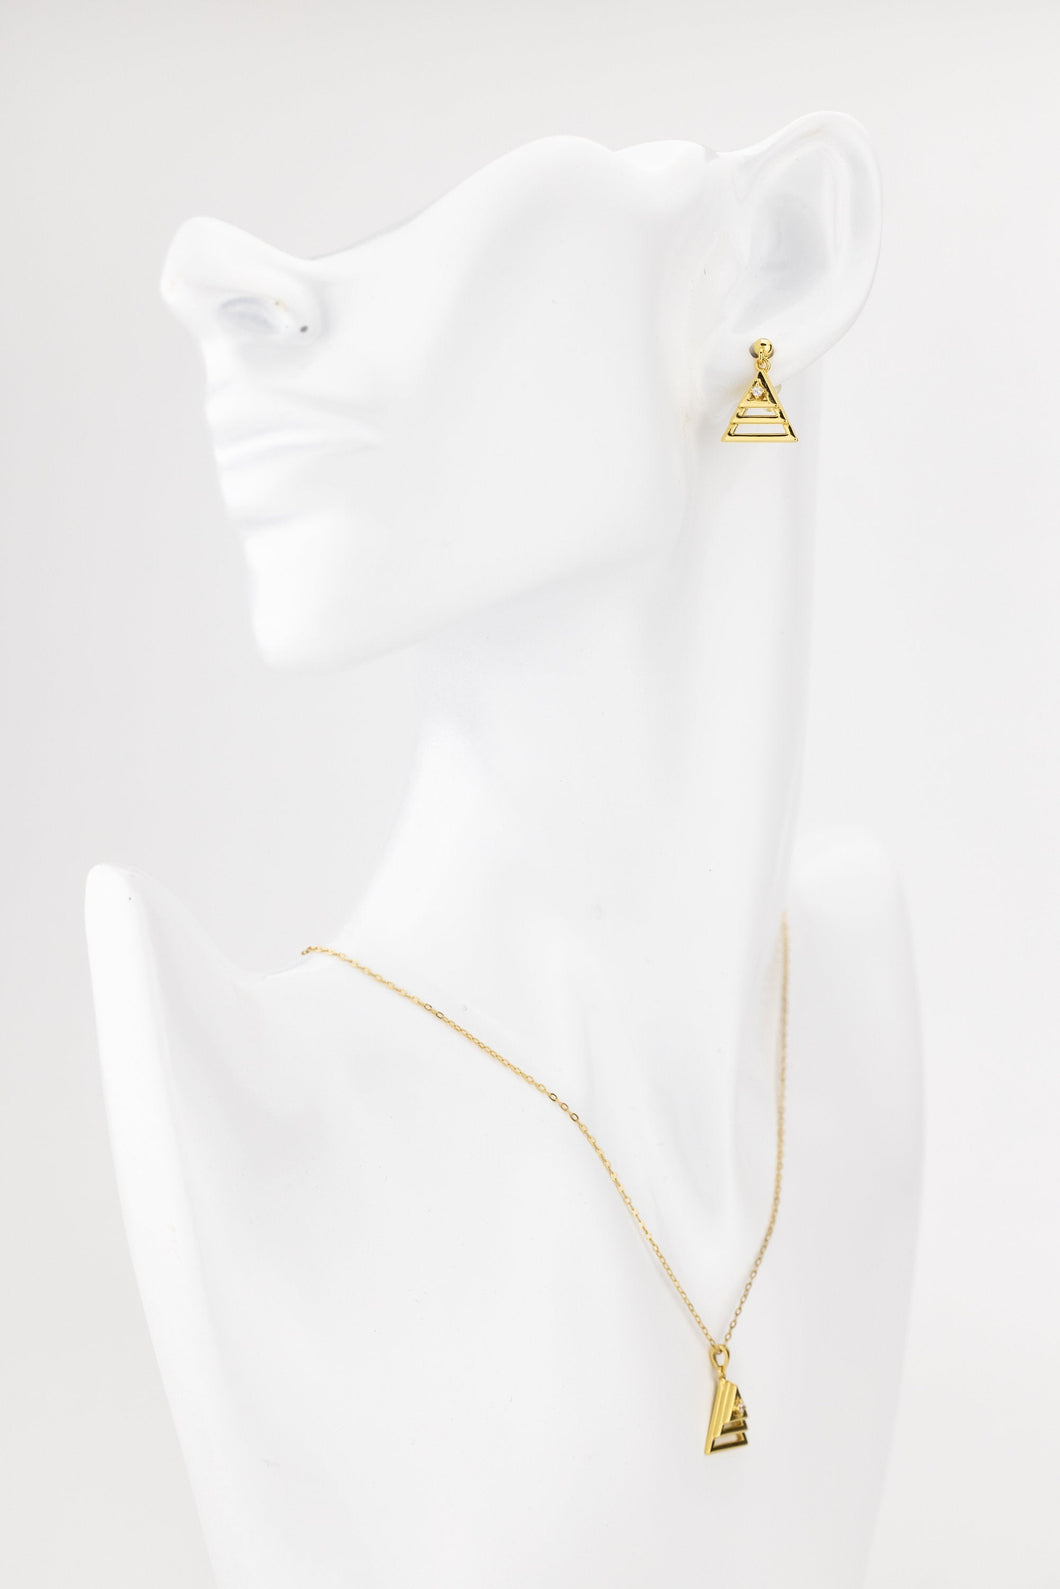 Layered triangle cz set, triangle cz pendant, triangle dangle earrings, tiny cz, layered, geometric necklace, minimalist cz jewelry set, 925